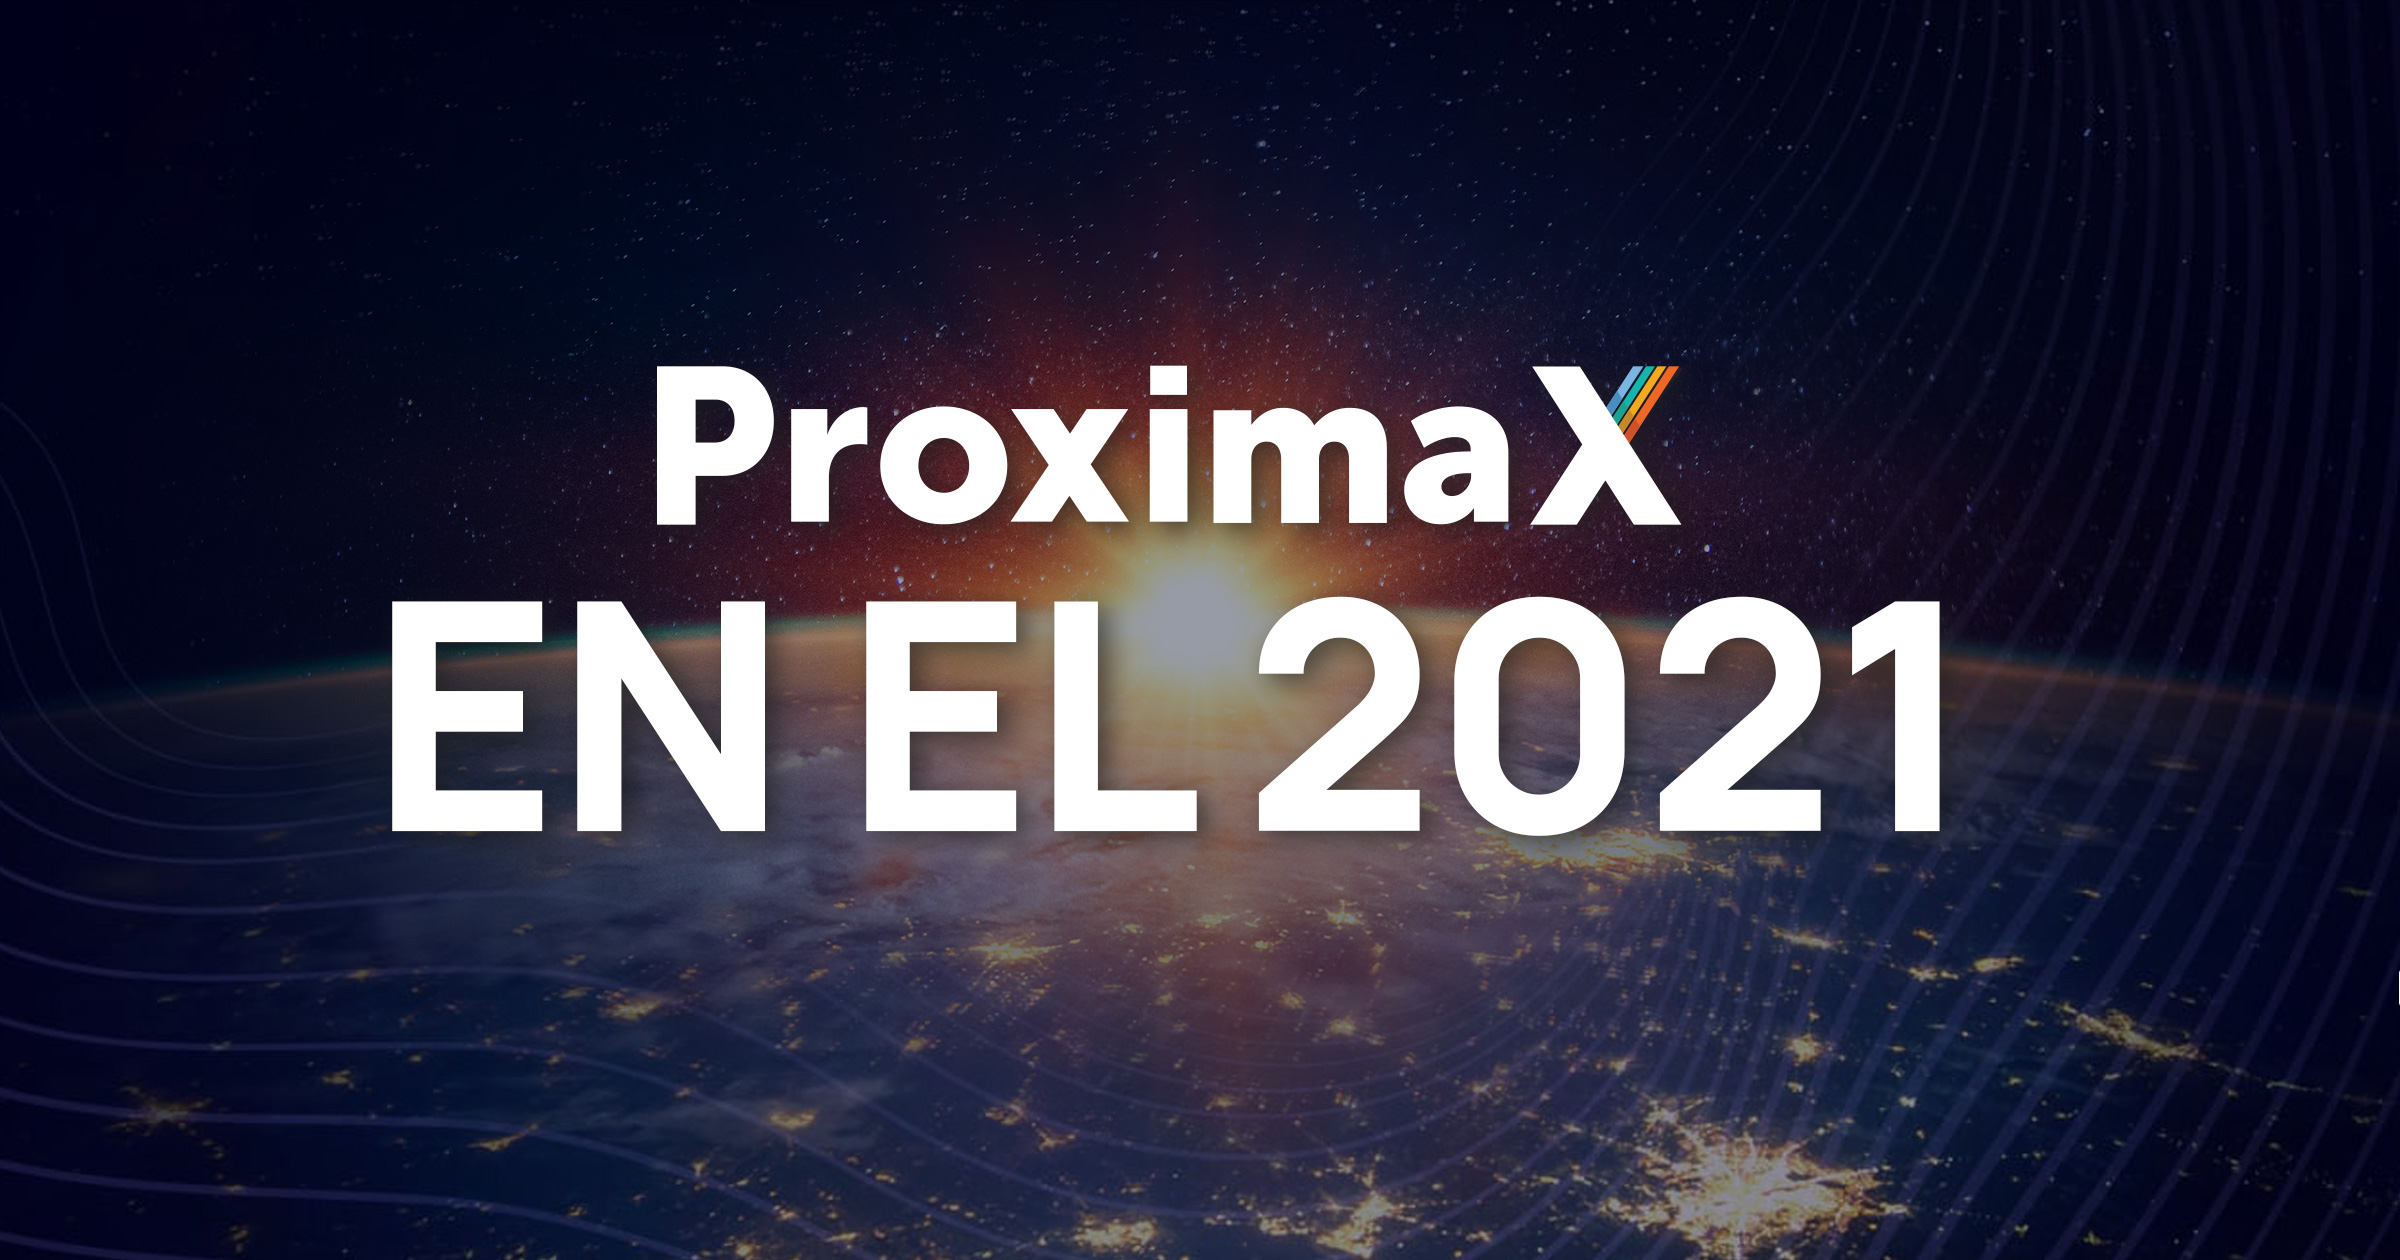 PROXIMAX EN EL 2021